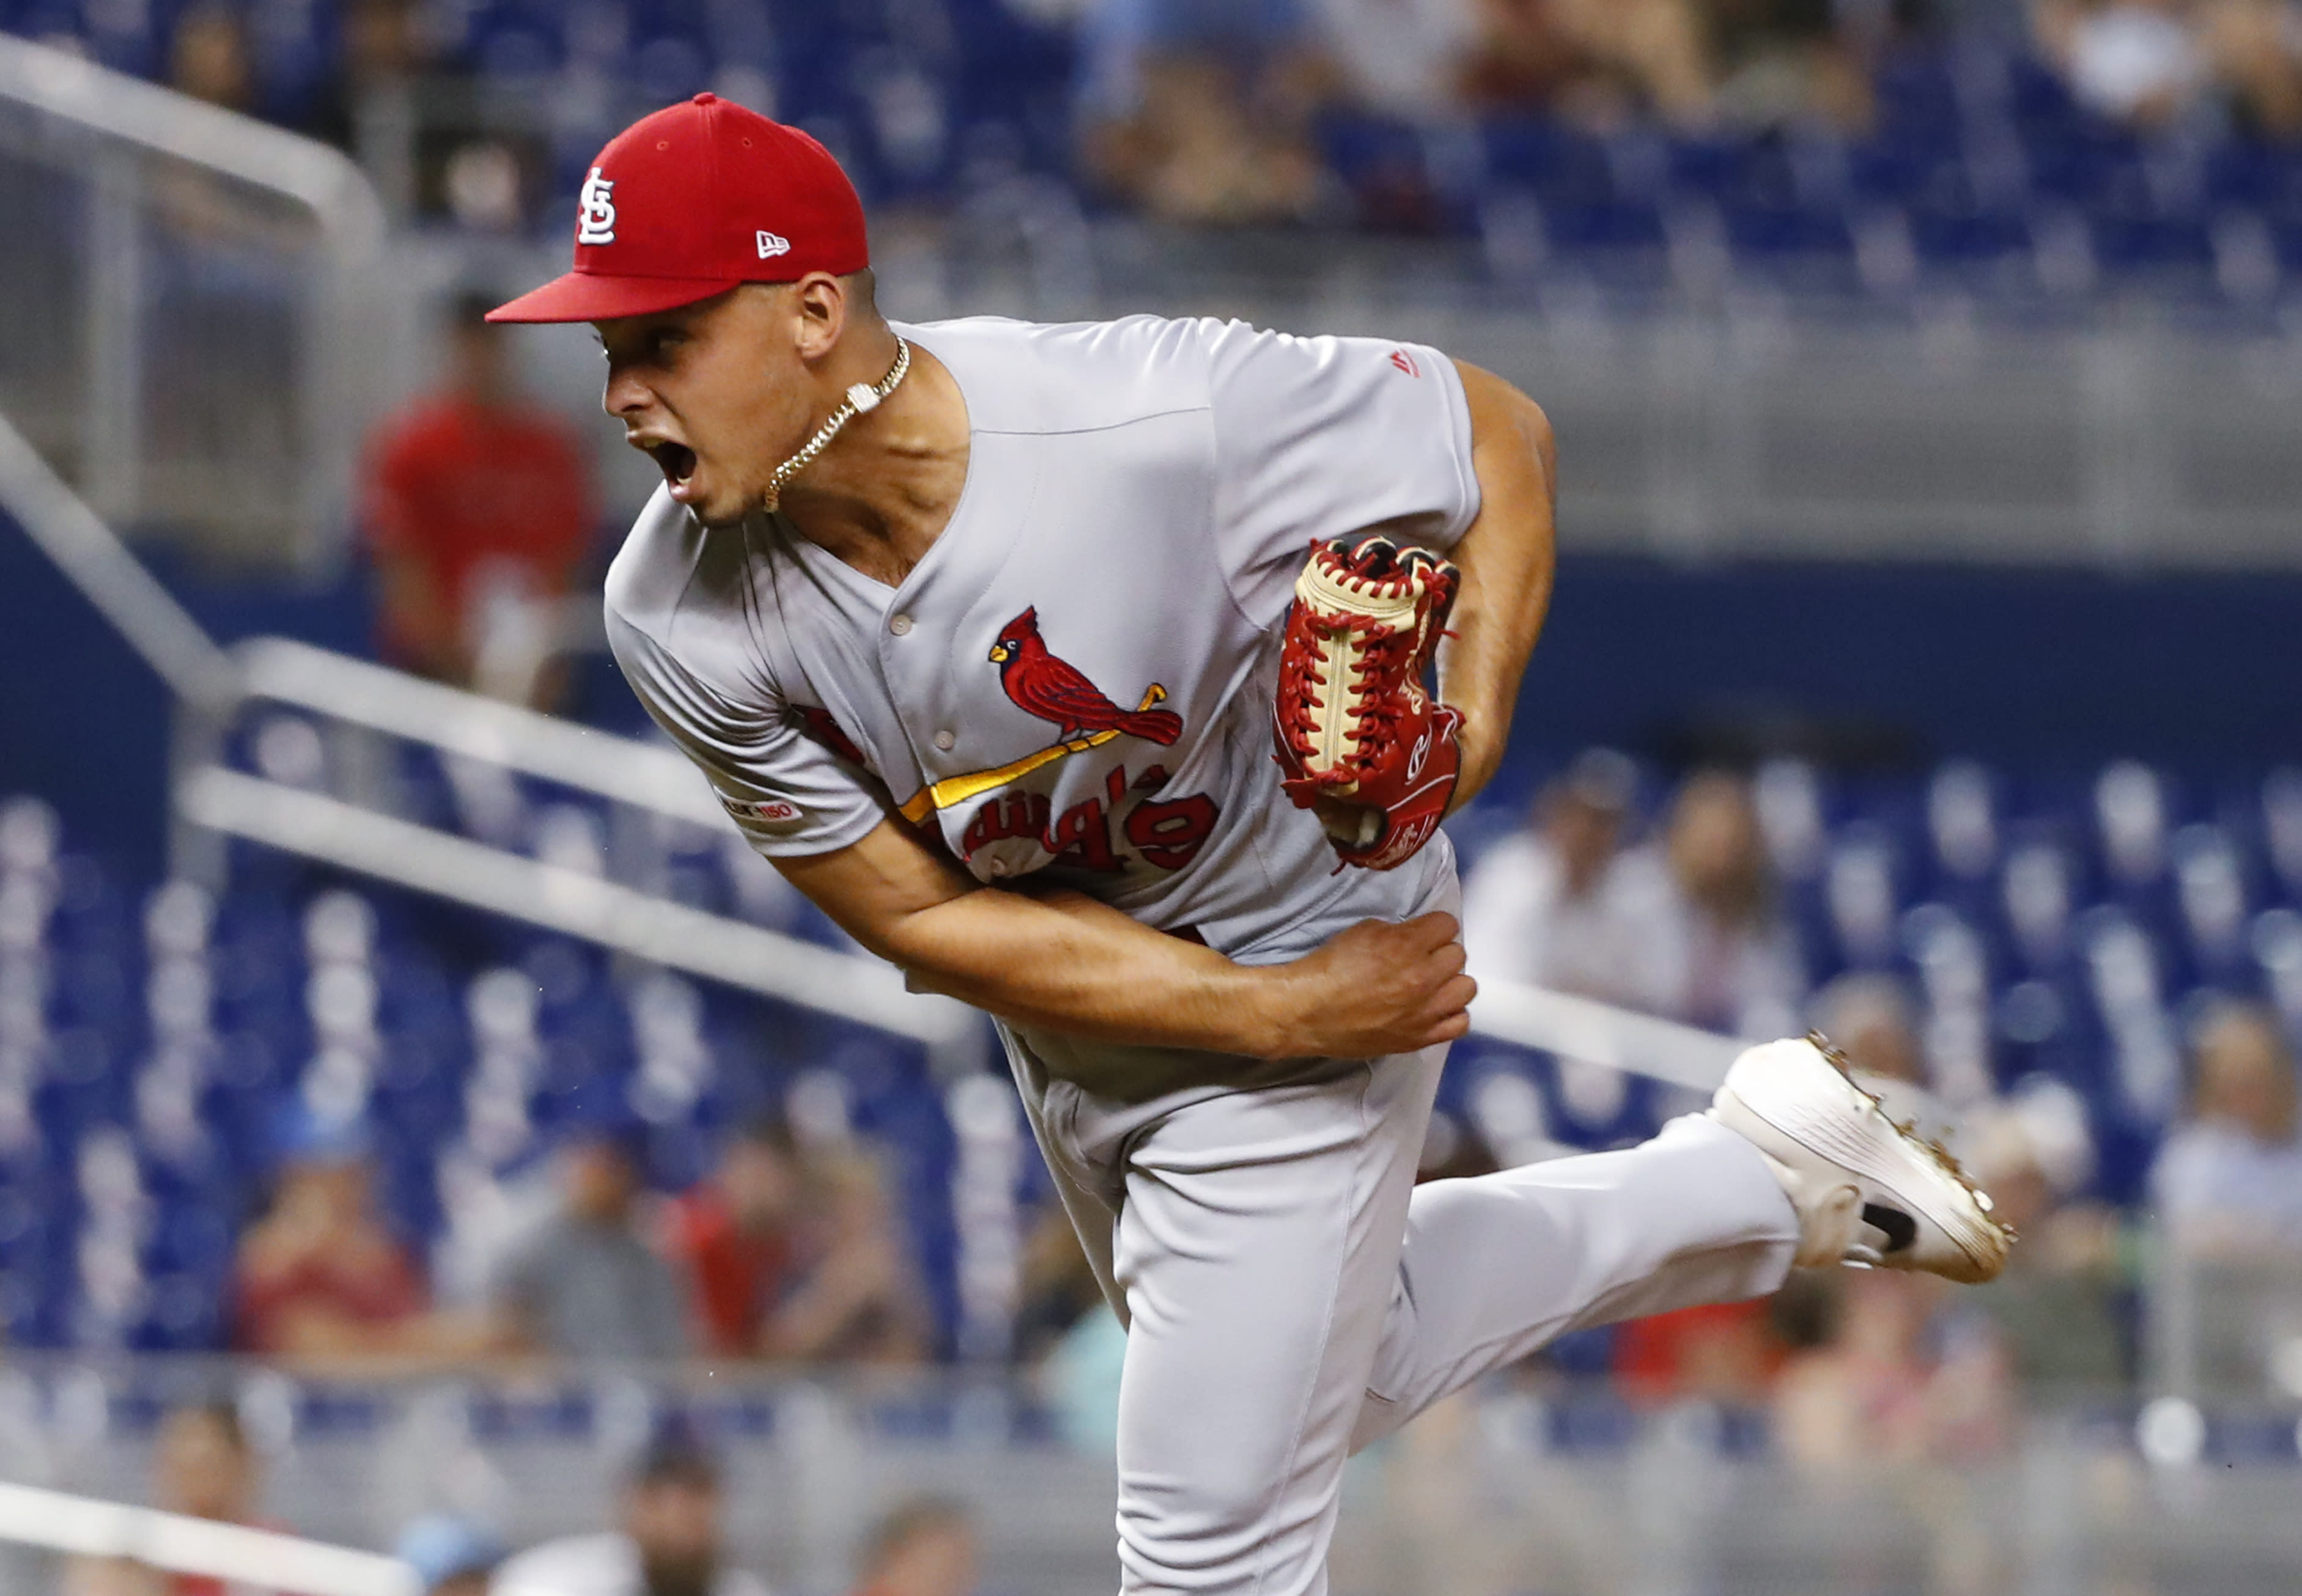 Rocket-armed Cardinals closer Hicks has torn elbow ligament